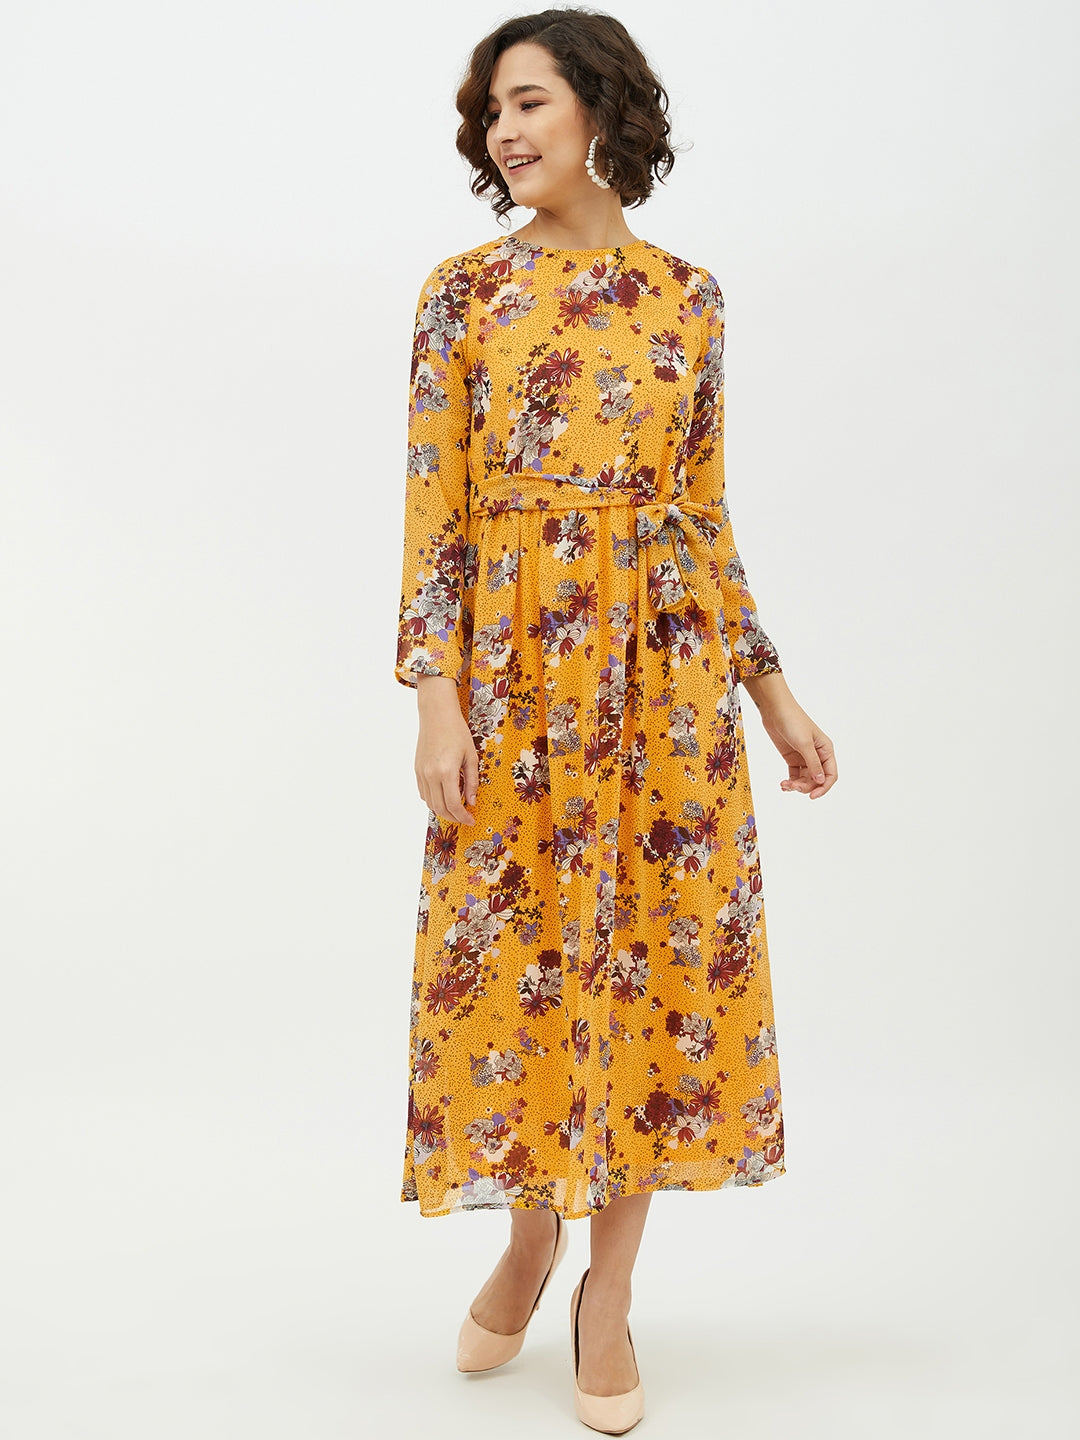 Women's Yellow Printed Floral Long Dress